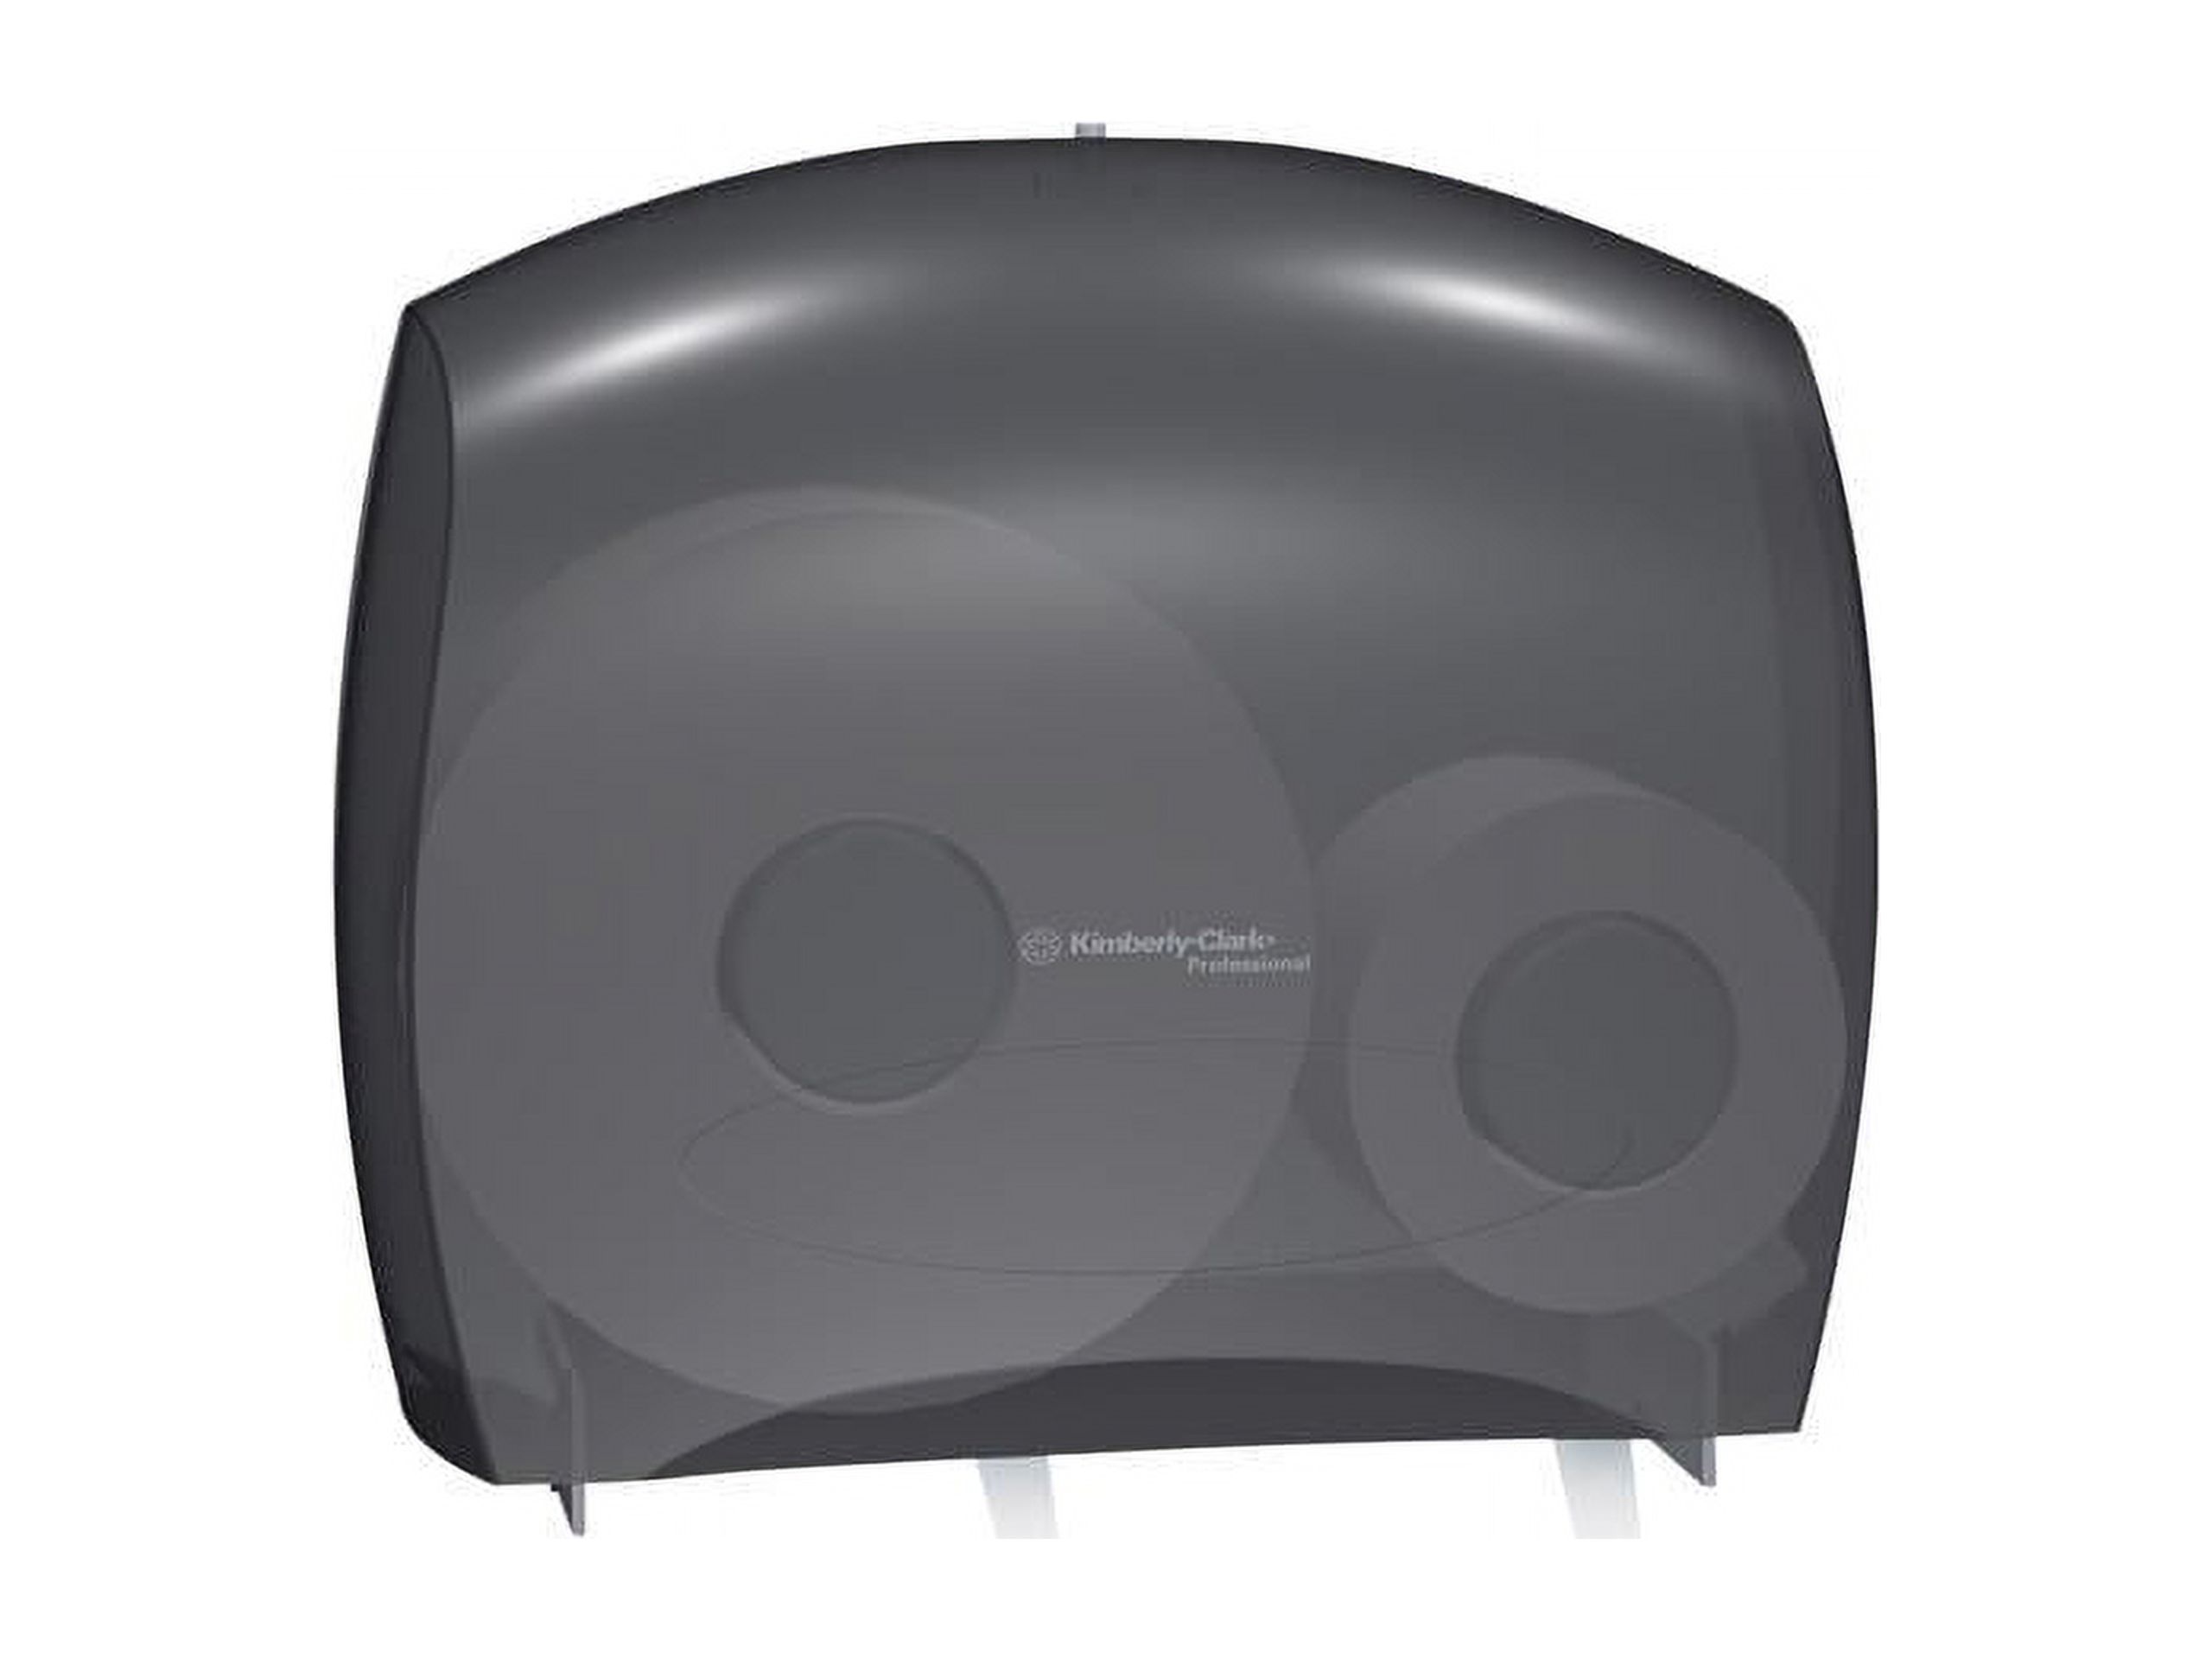 Kimberly Clark Professional JRT Jr. Escort Jumbo Roll. Commercial Toilet Paper Dispenser (09507), with Stub Roll, 16” x 13.88” x 5.75”, Smoke per Black - image 1 of 3